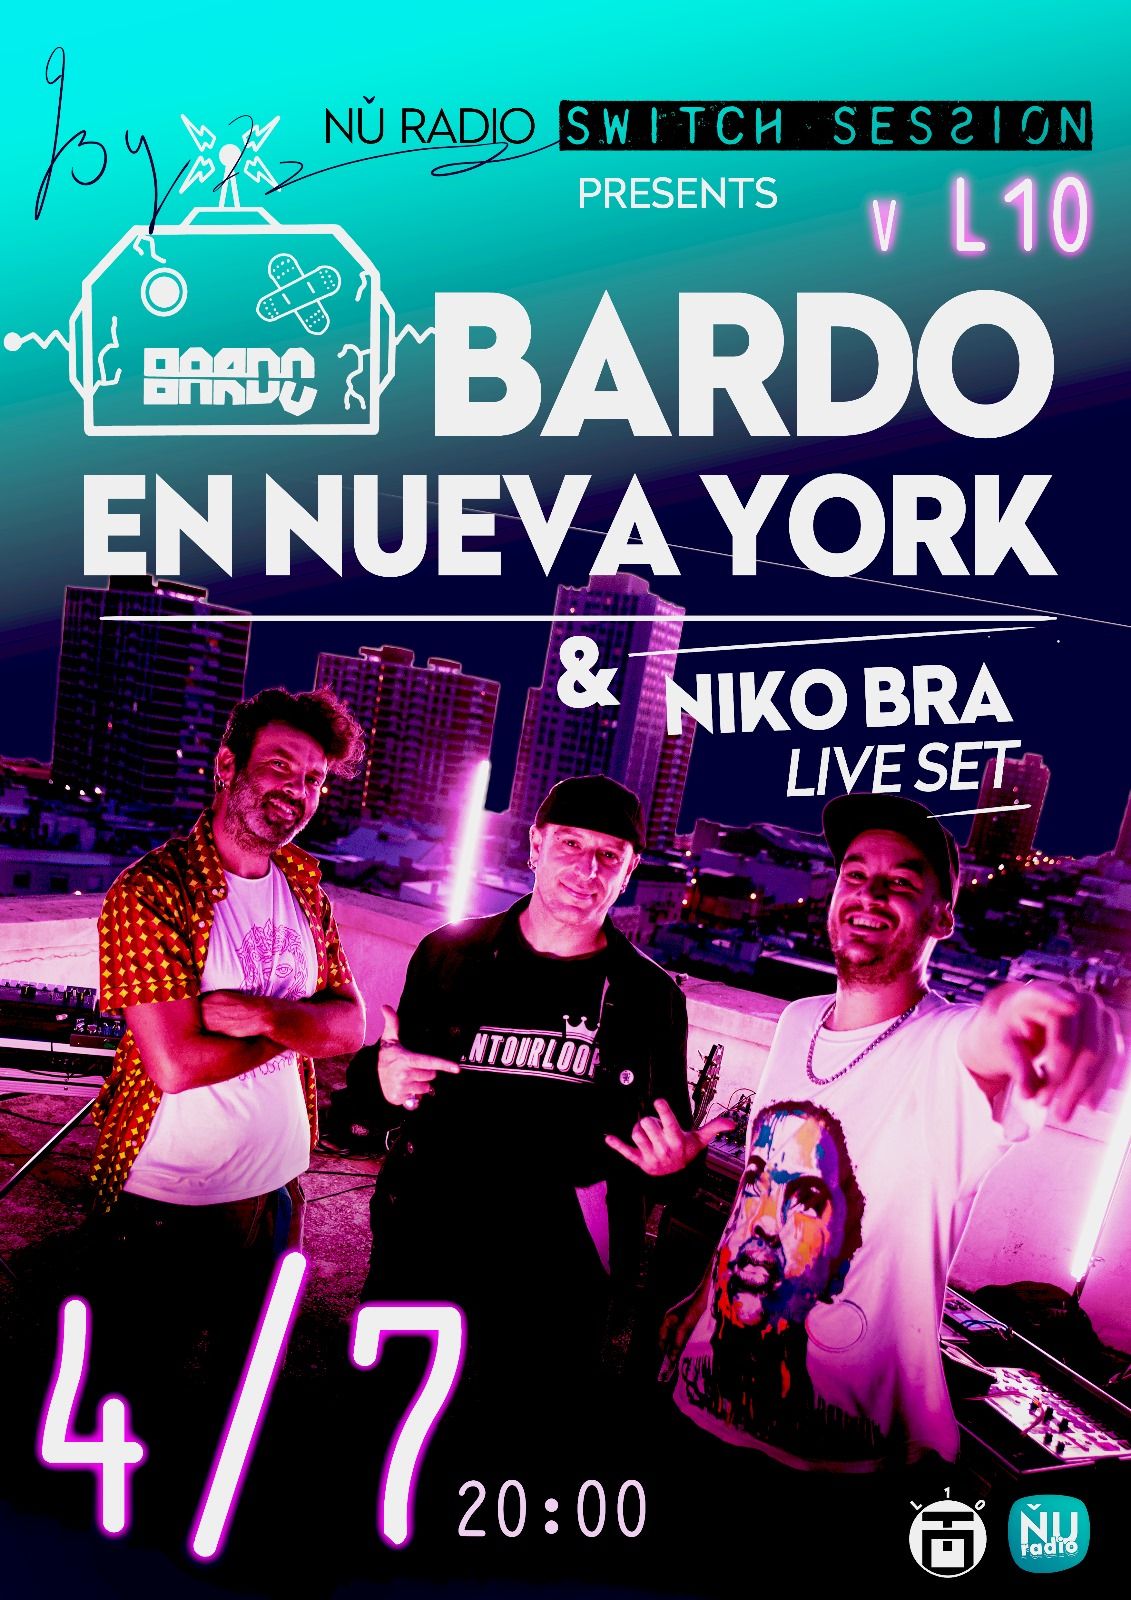 Switch Sessions : Bardo en Nueva York + Niko Bra libe set